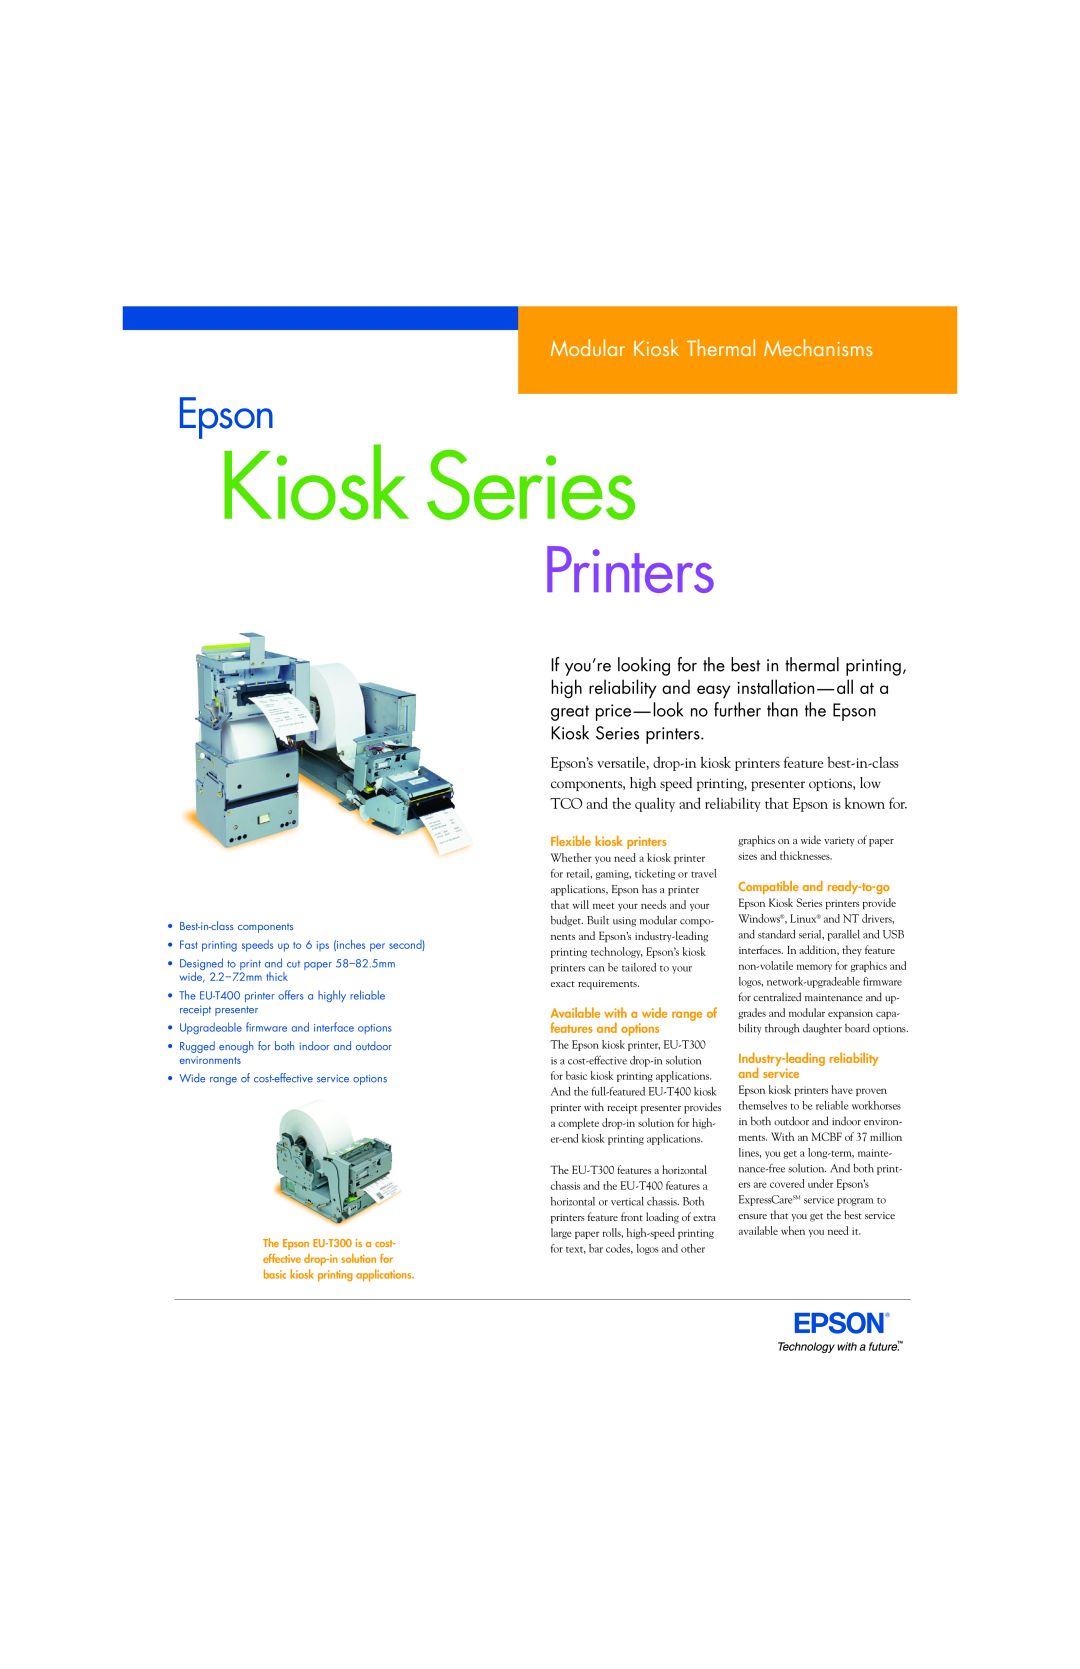 Epson EU-T300 manual Kiosk Series, Printers, Epson, Modular Kiosk Thermal Mechanisms, Flexible kiosk printers 